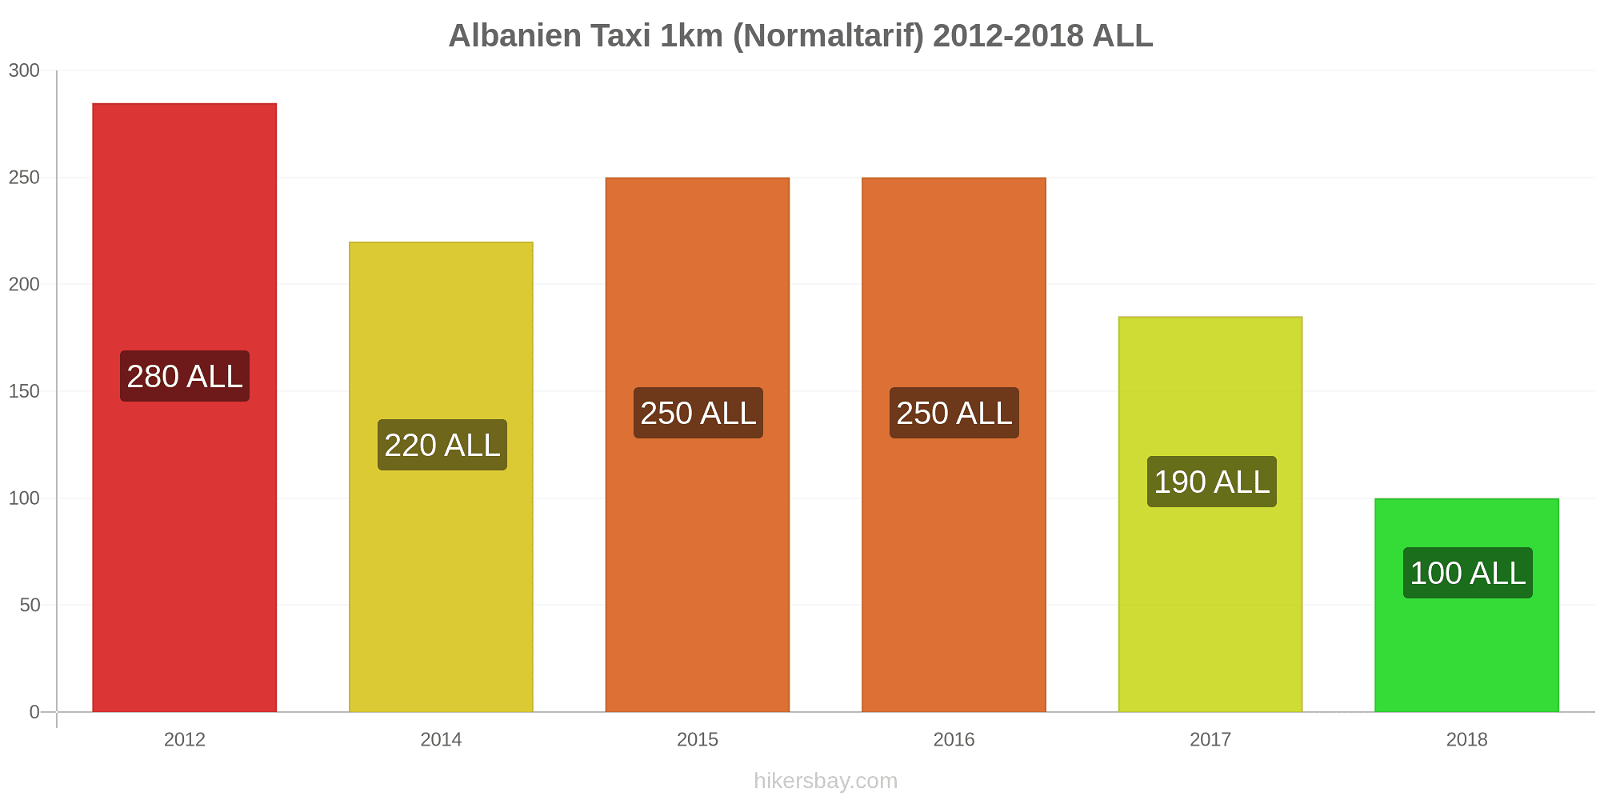 Albanien Preisänderungen Taxi 1km (Normaltarif) hikersbay.com